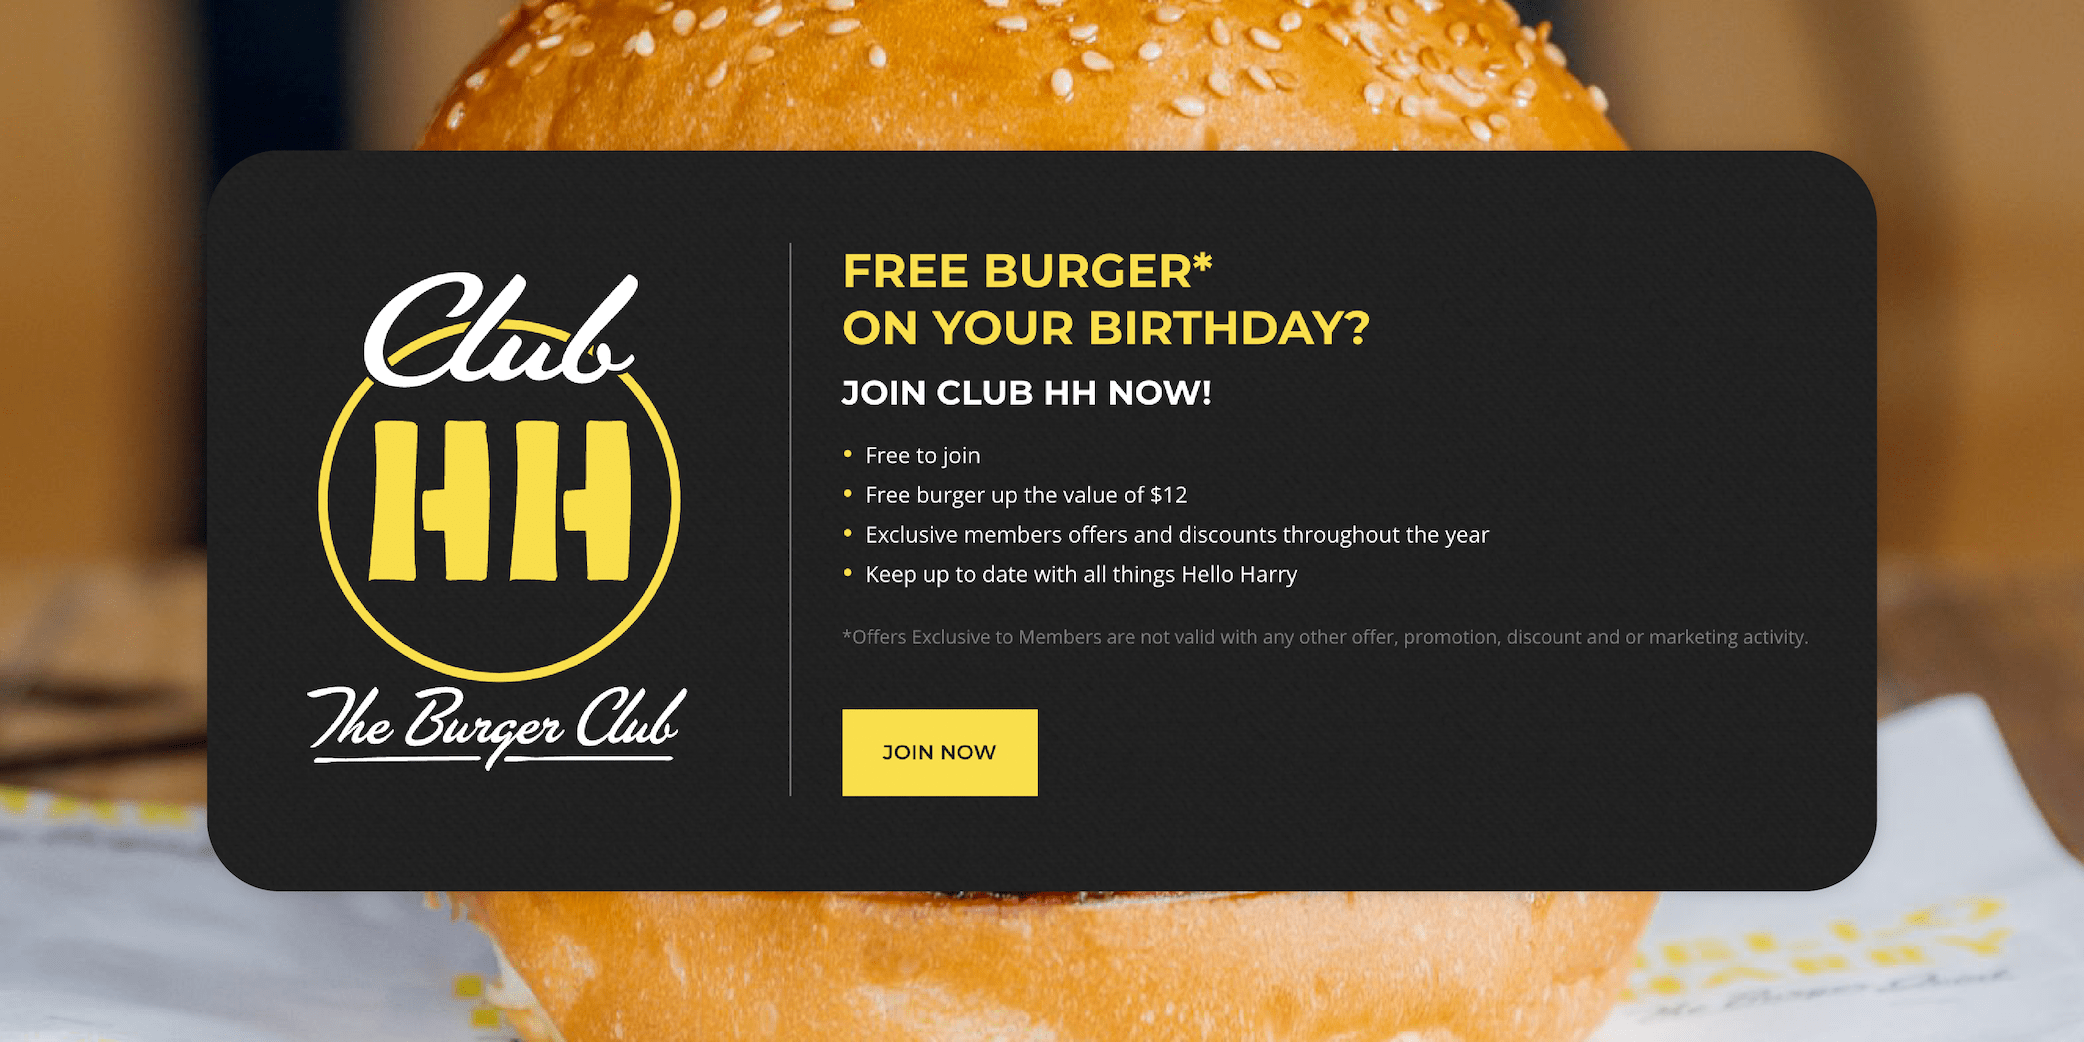 Hello Harry's free burger birthday offer website banner